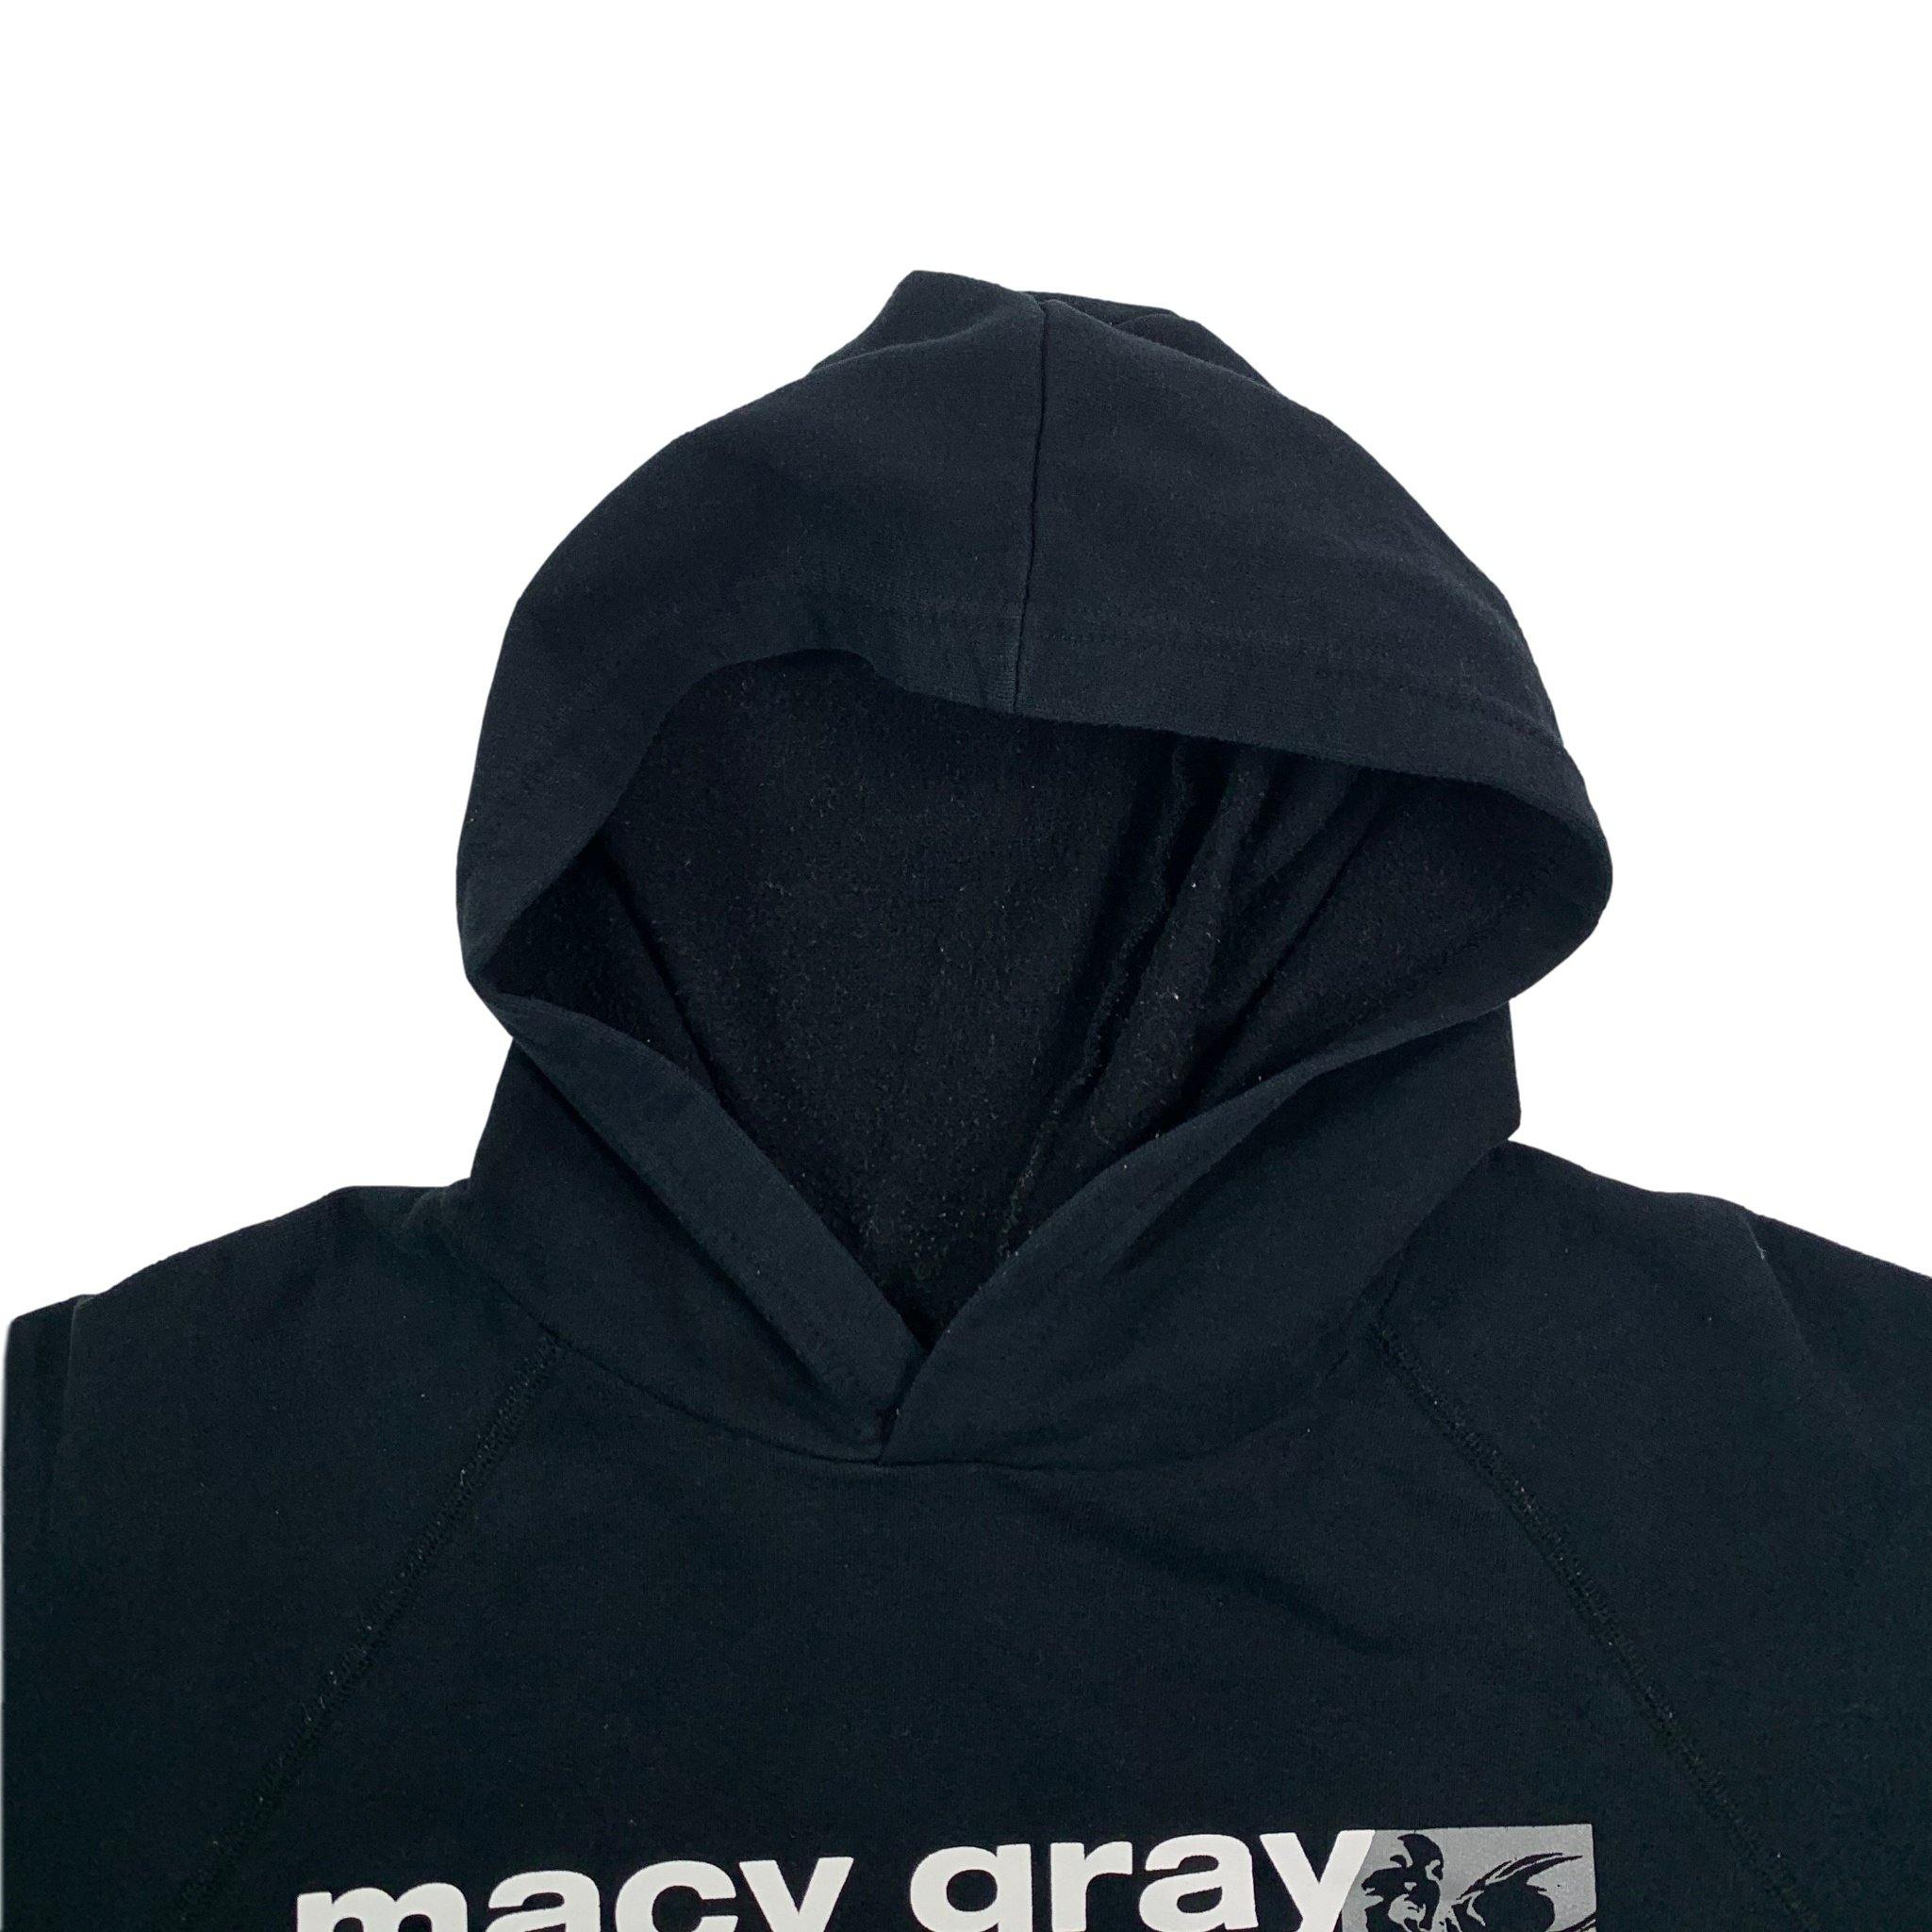 macy gray the id